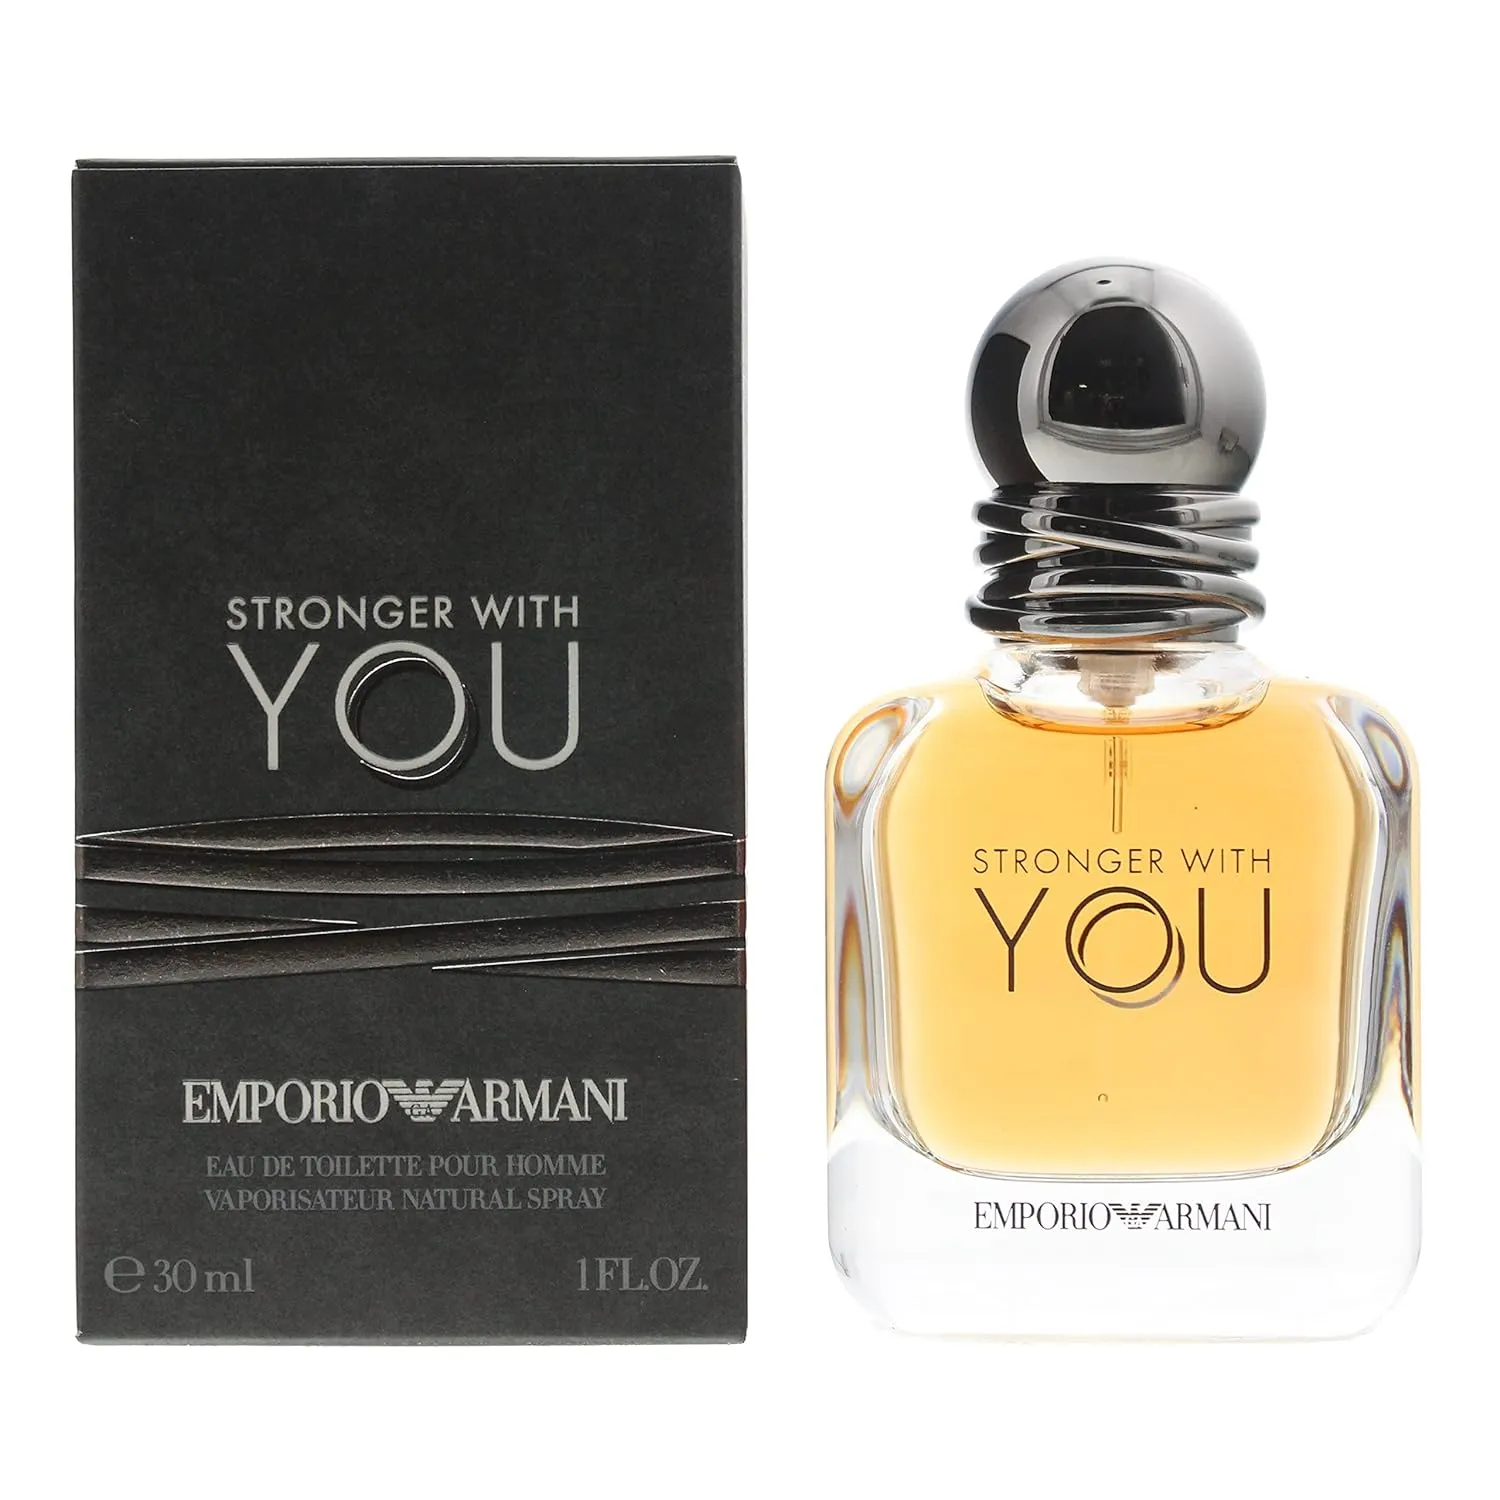 Perfume  Emporio Armani Stronger With You de Giorgio Armani, 1.0 onzas Eau de toilette ORIGINAL